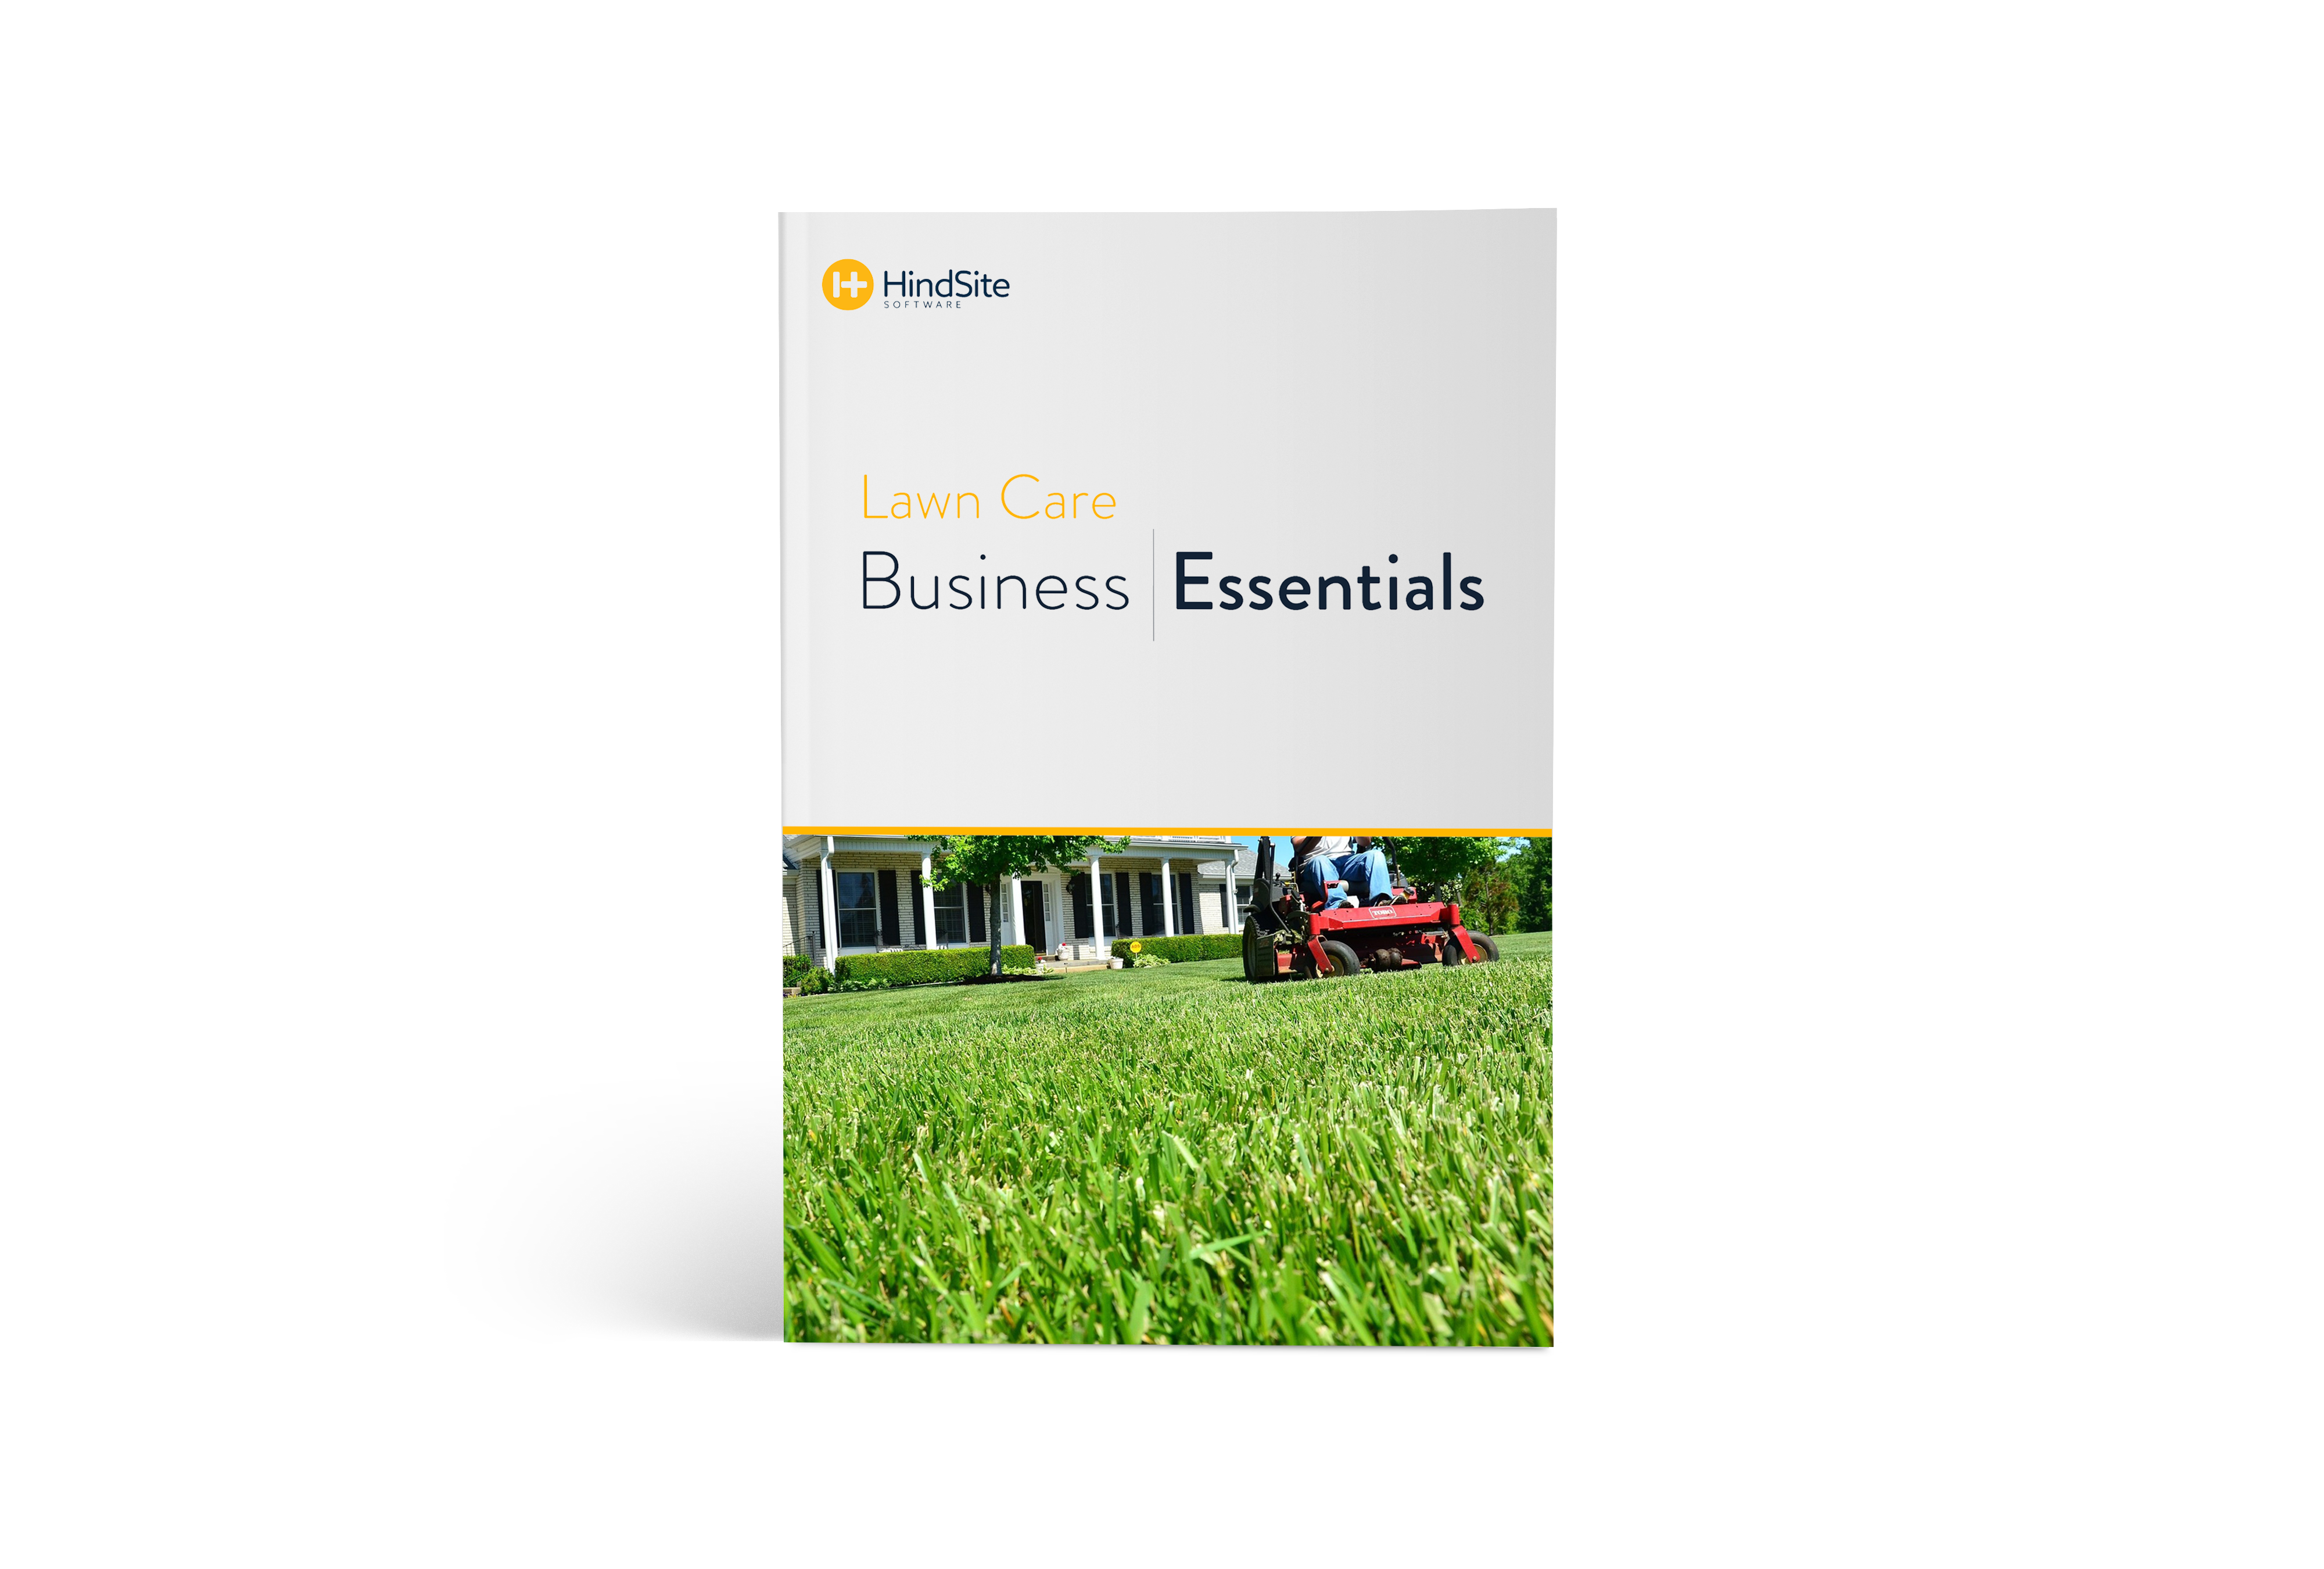 Lawn Care Business Essentials ebook cover.